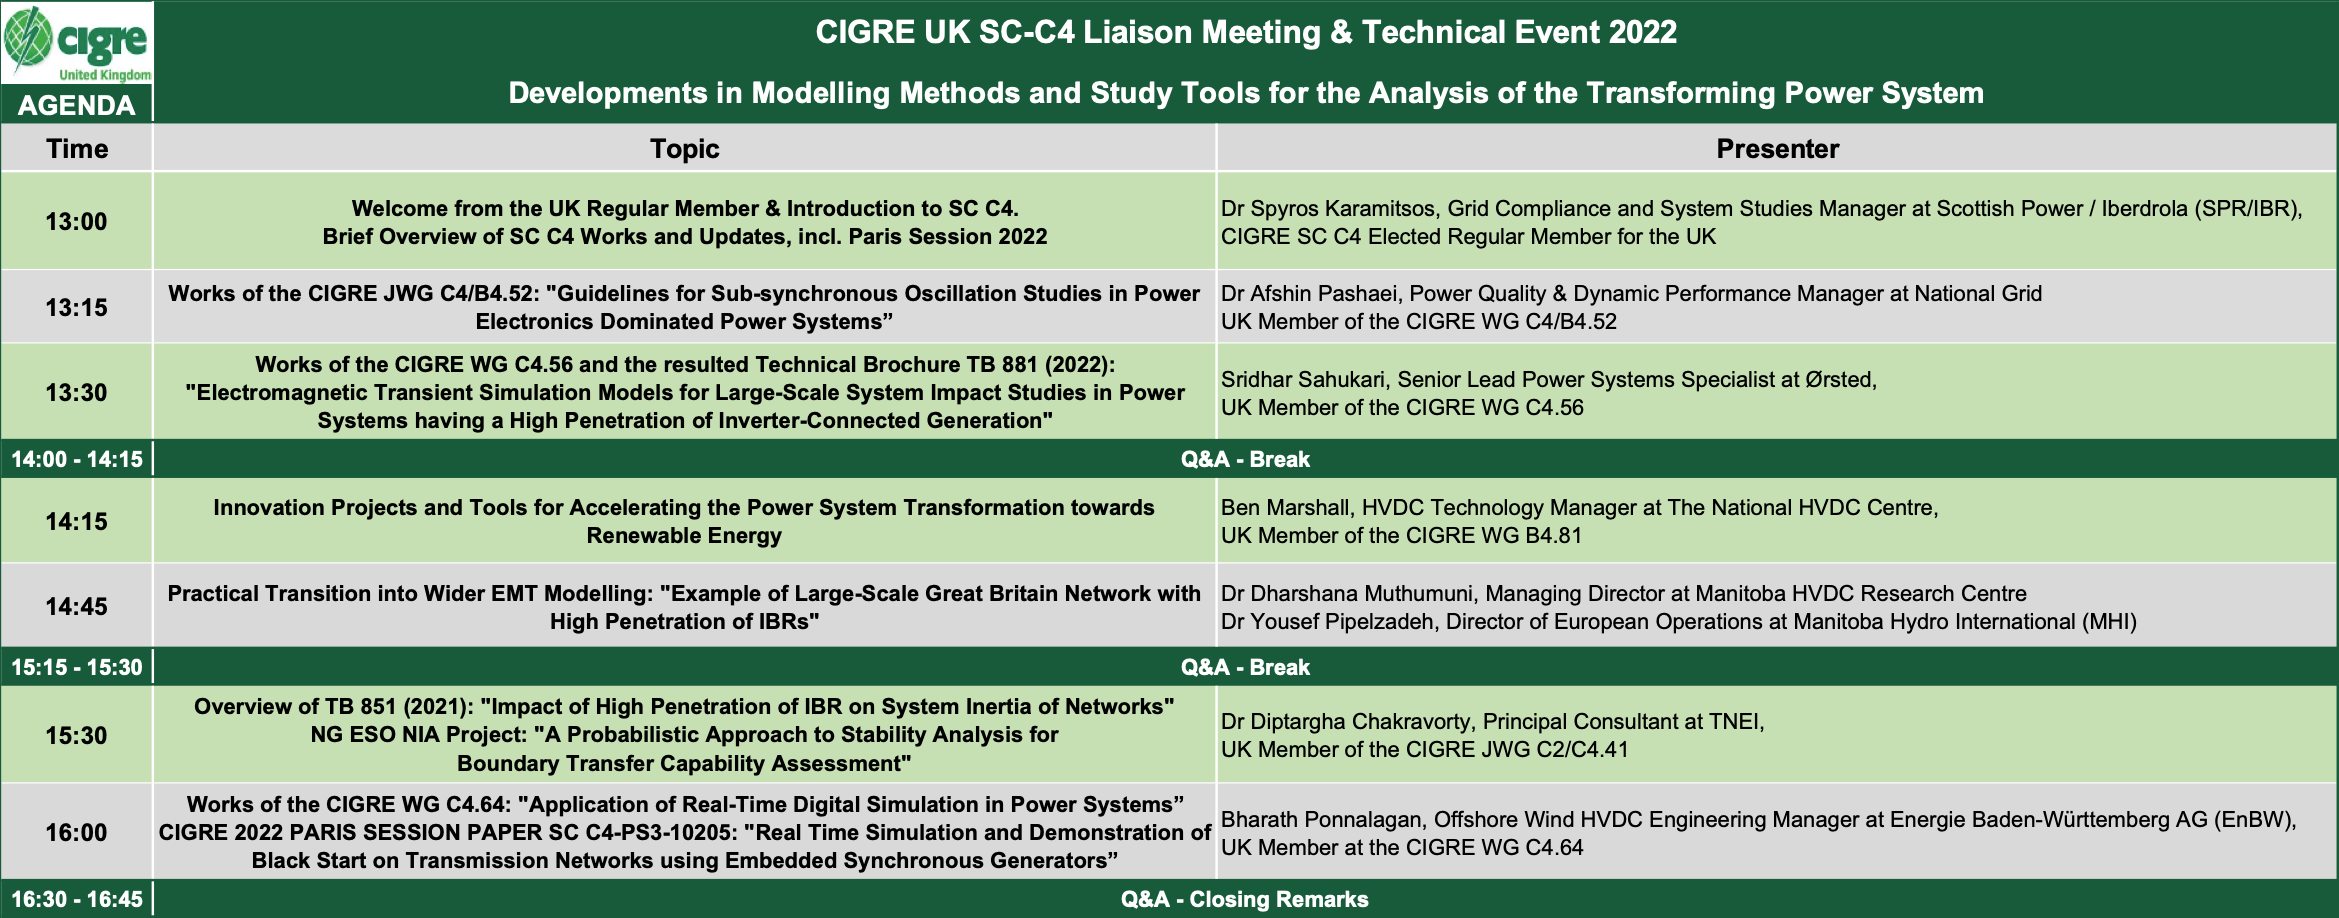 C4 Liaison Meeting agenda